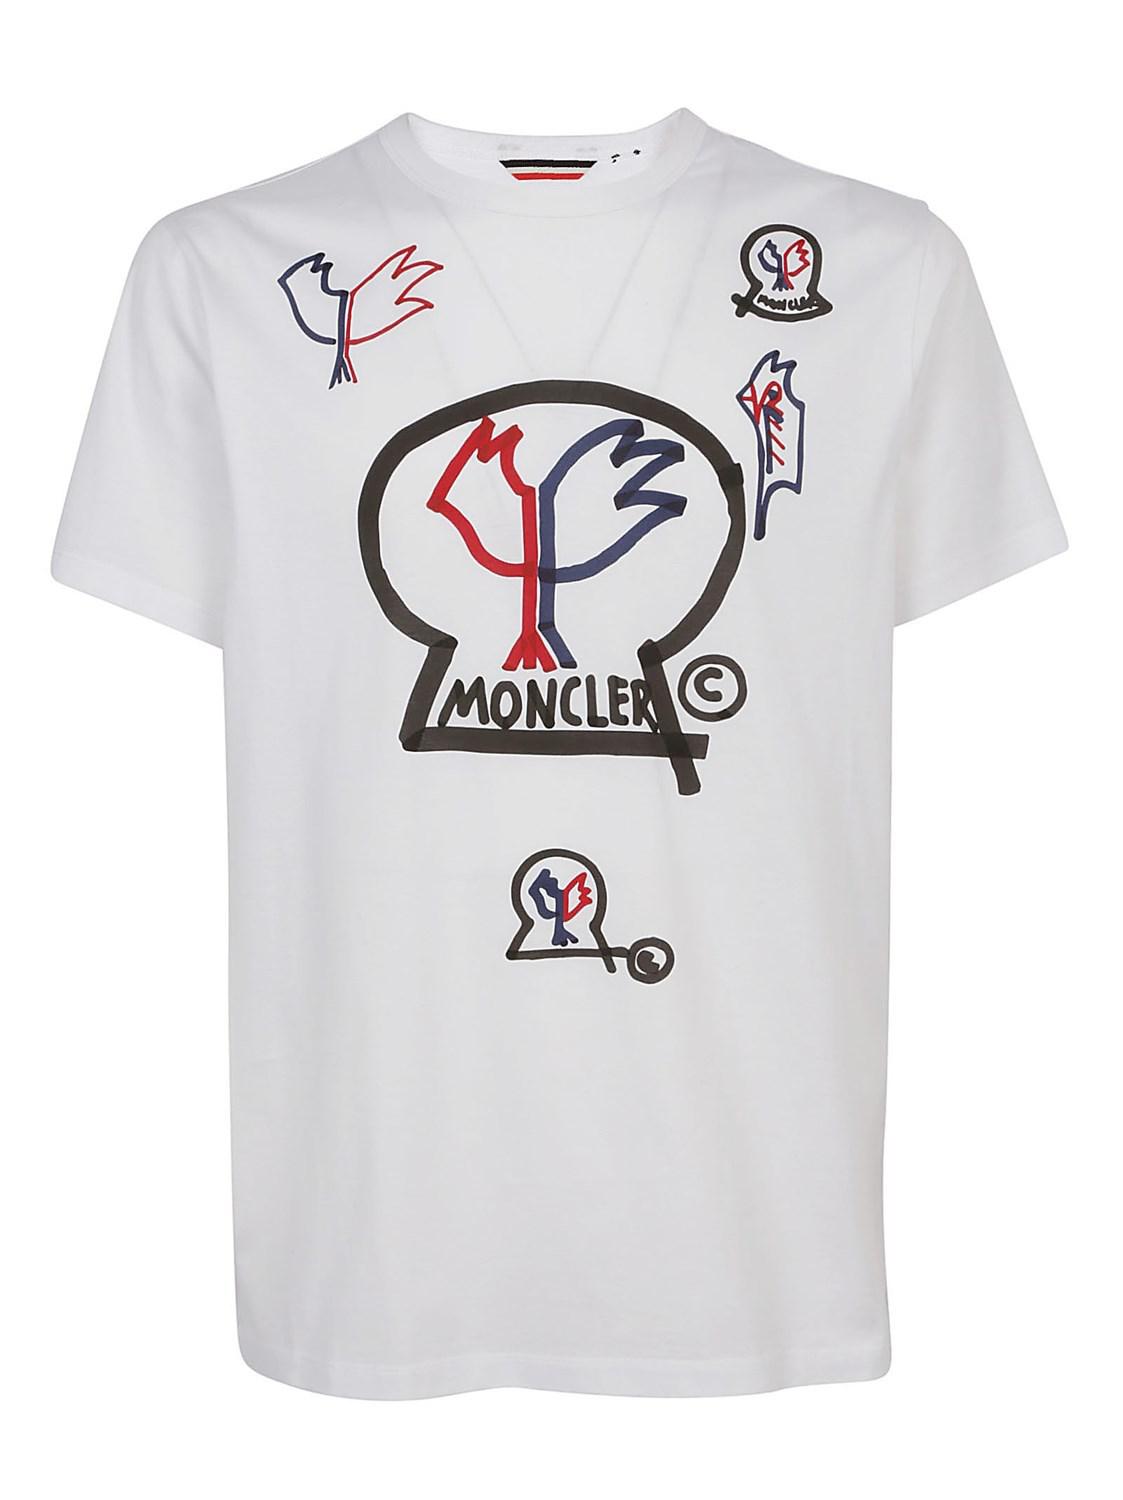 Moncler Cotton 1952 Logo T-shirt in White for Men - Lyst